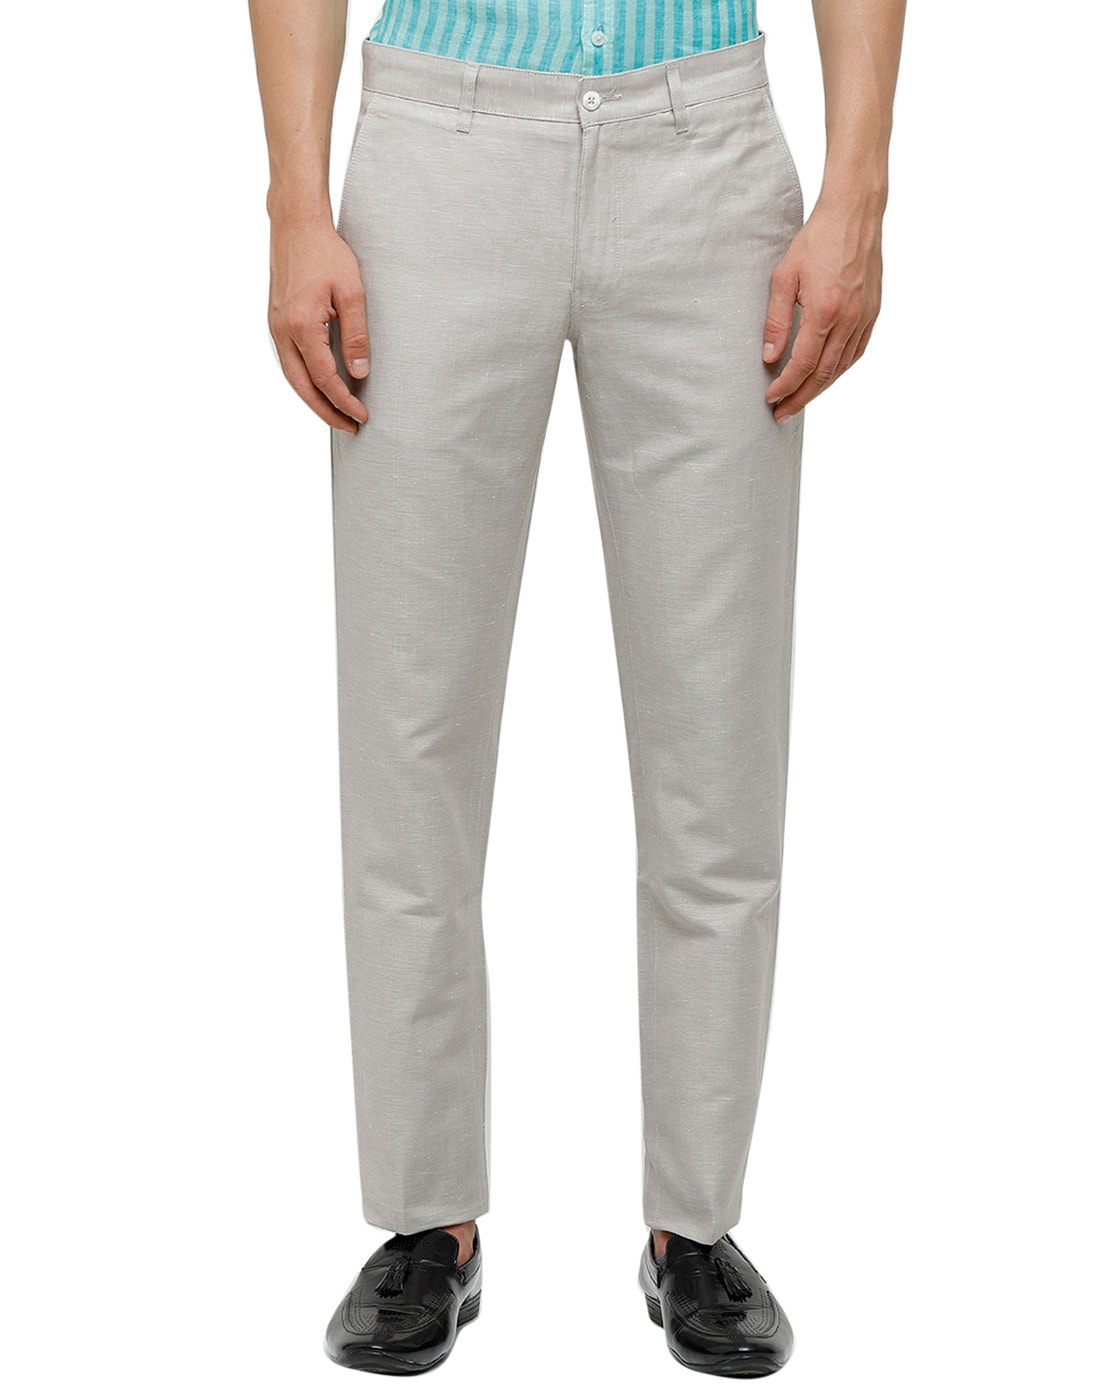 Buy Silver Grey Trousers  Pants for Men by JADE BLUE Online  Ajiocom